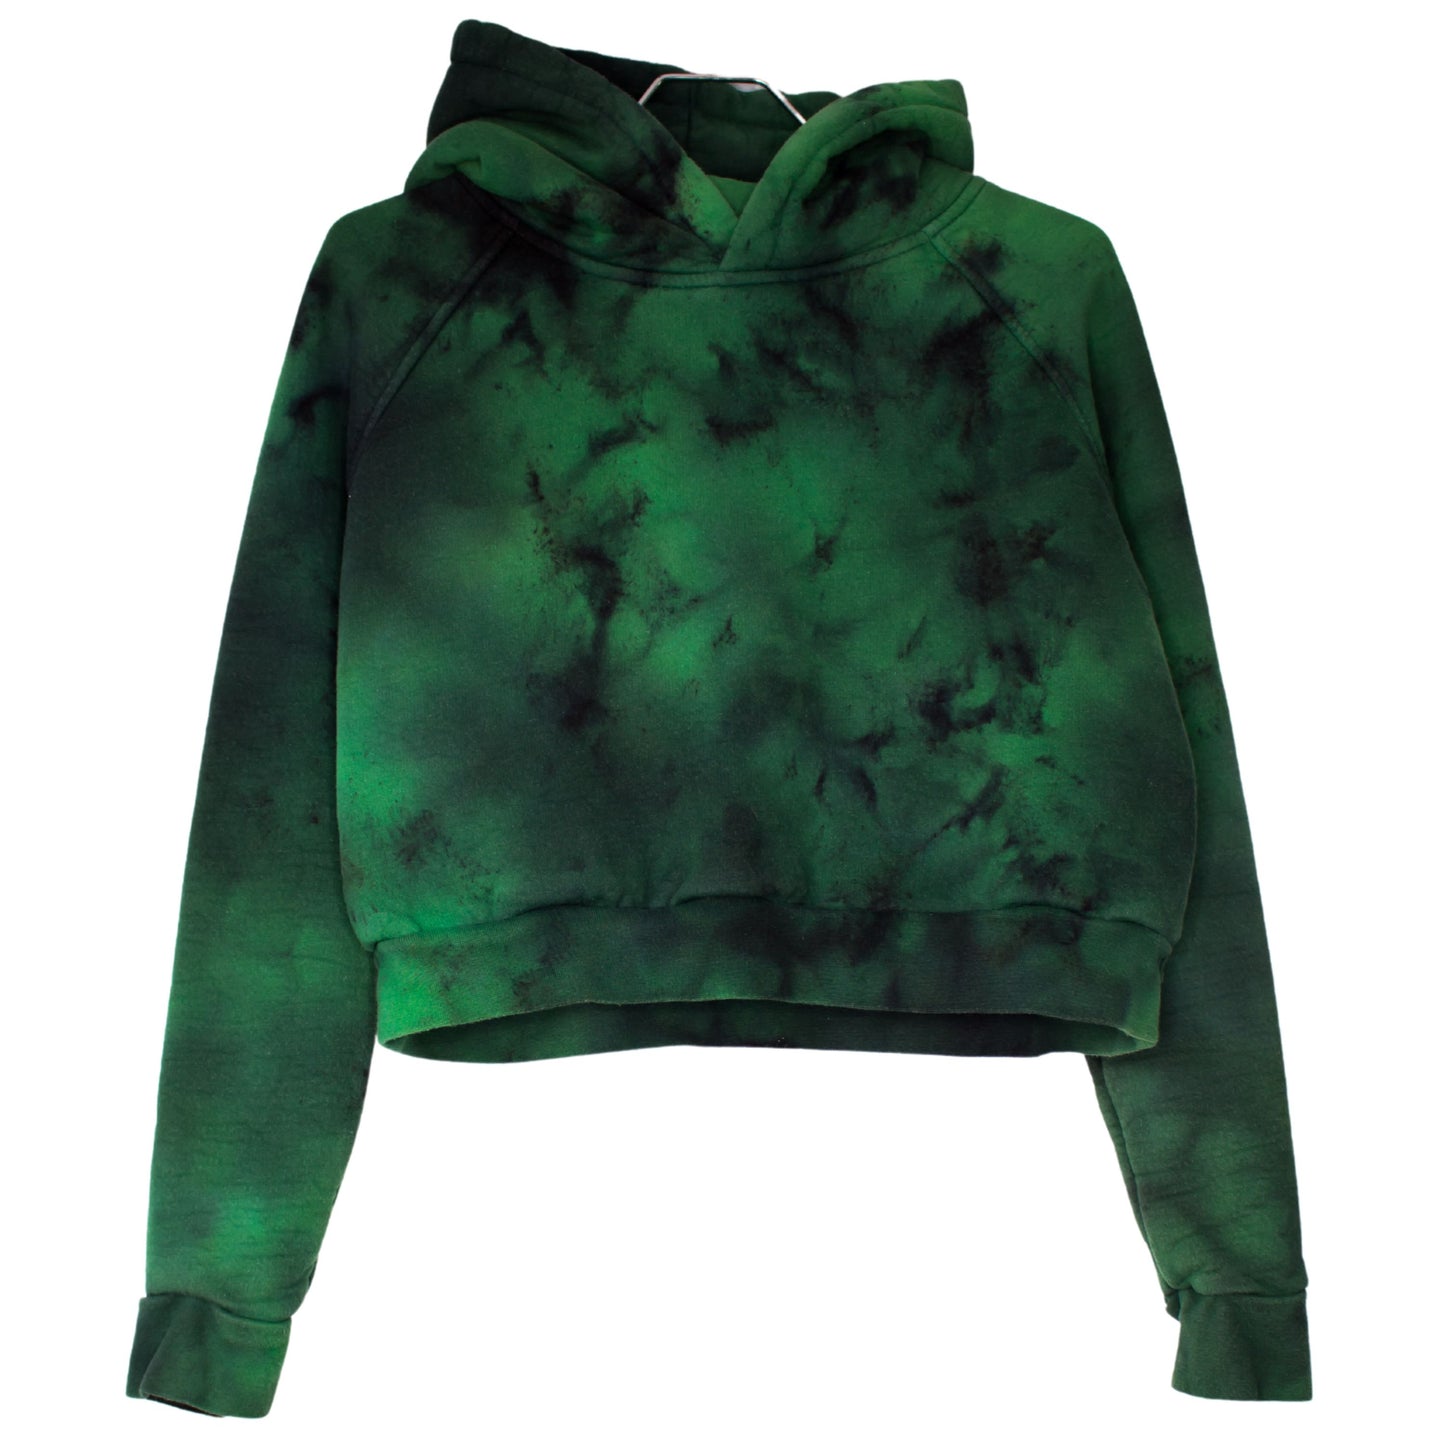 Size S & 2X - Alien black and green tie dye Crop hoodie unisex dark hoodie fleece sweater